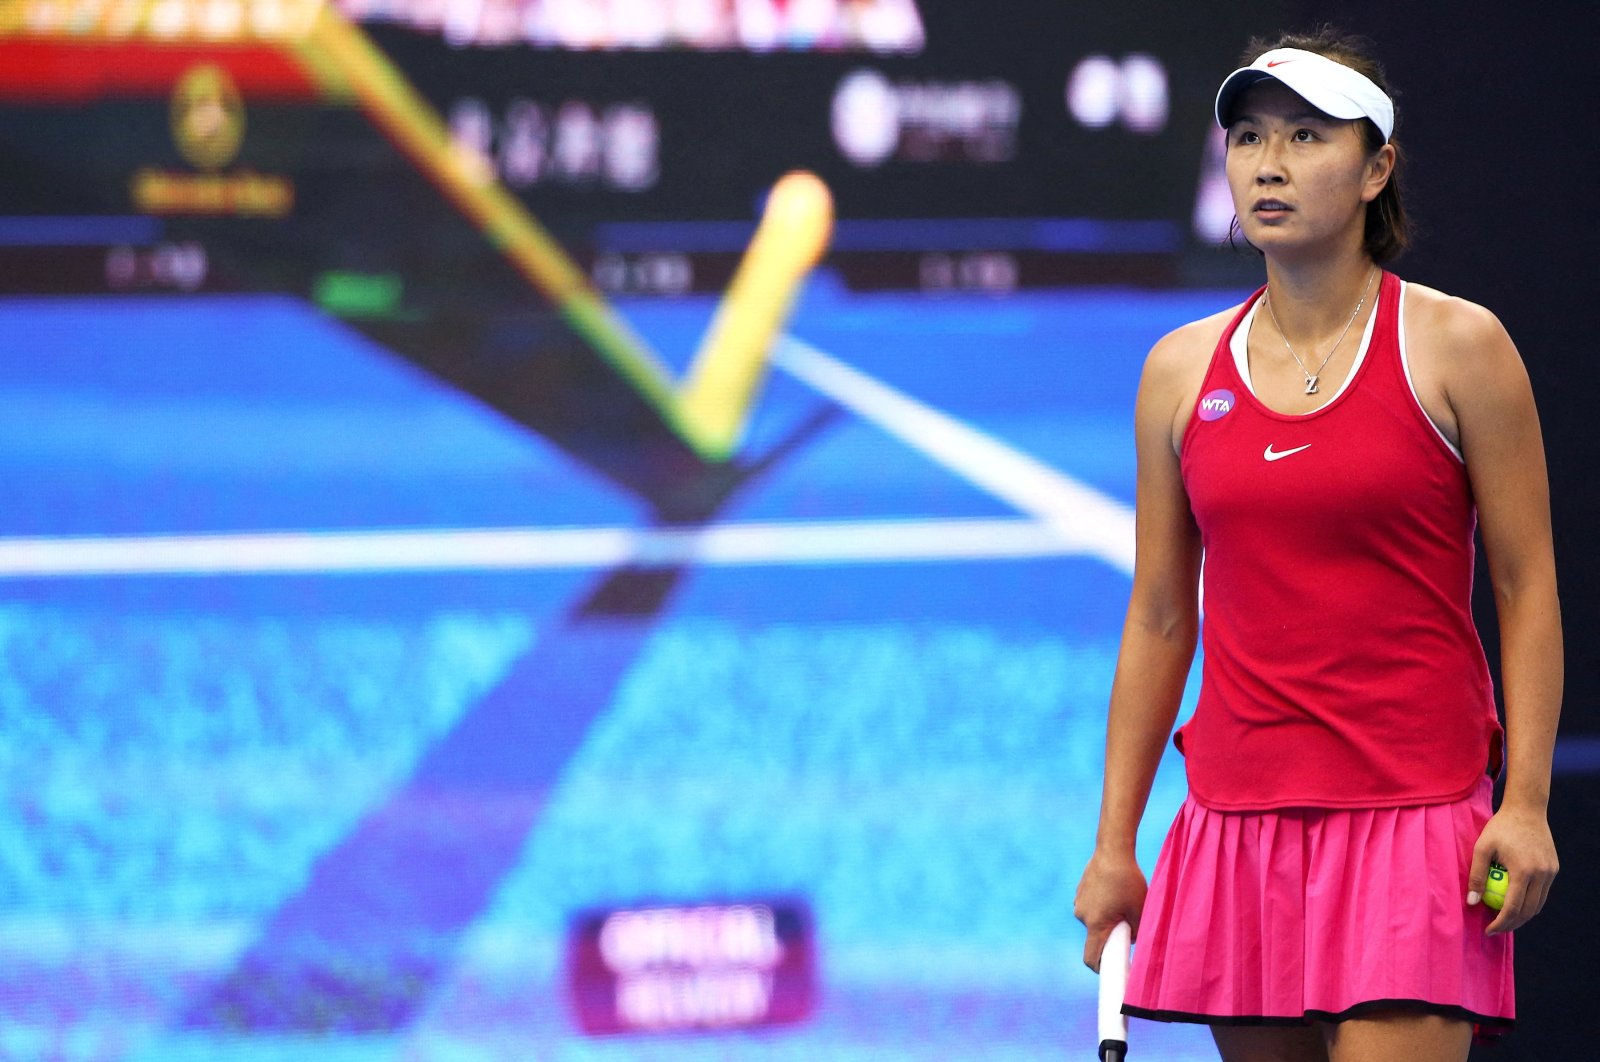 Bintang tenis China, Peng, membantah membuat tuduhan penyerangan seksual